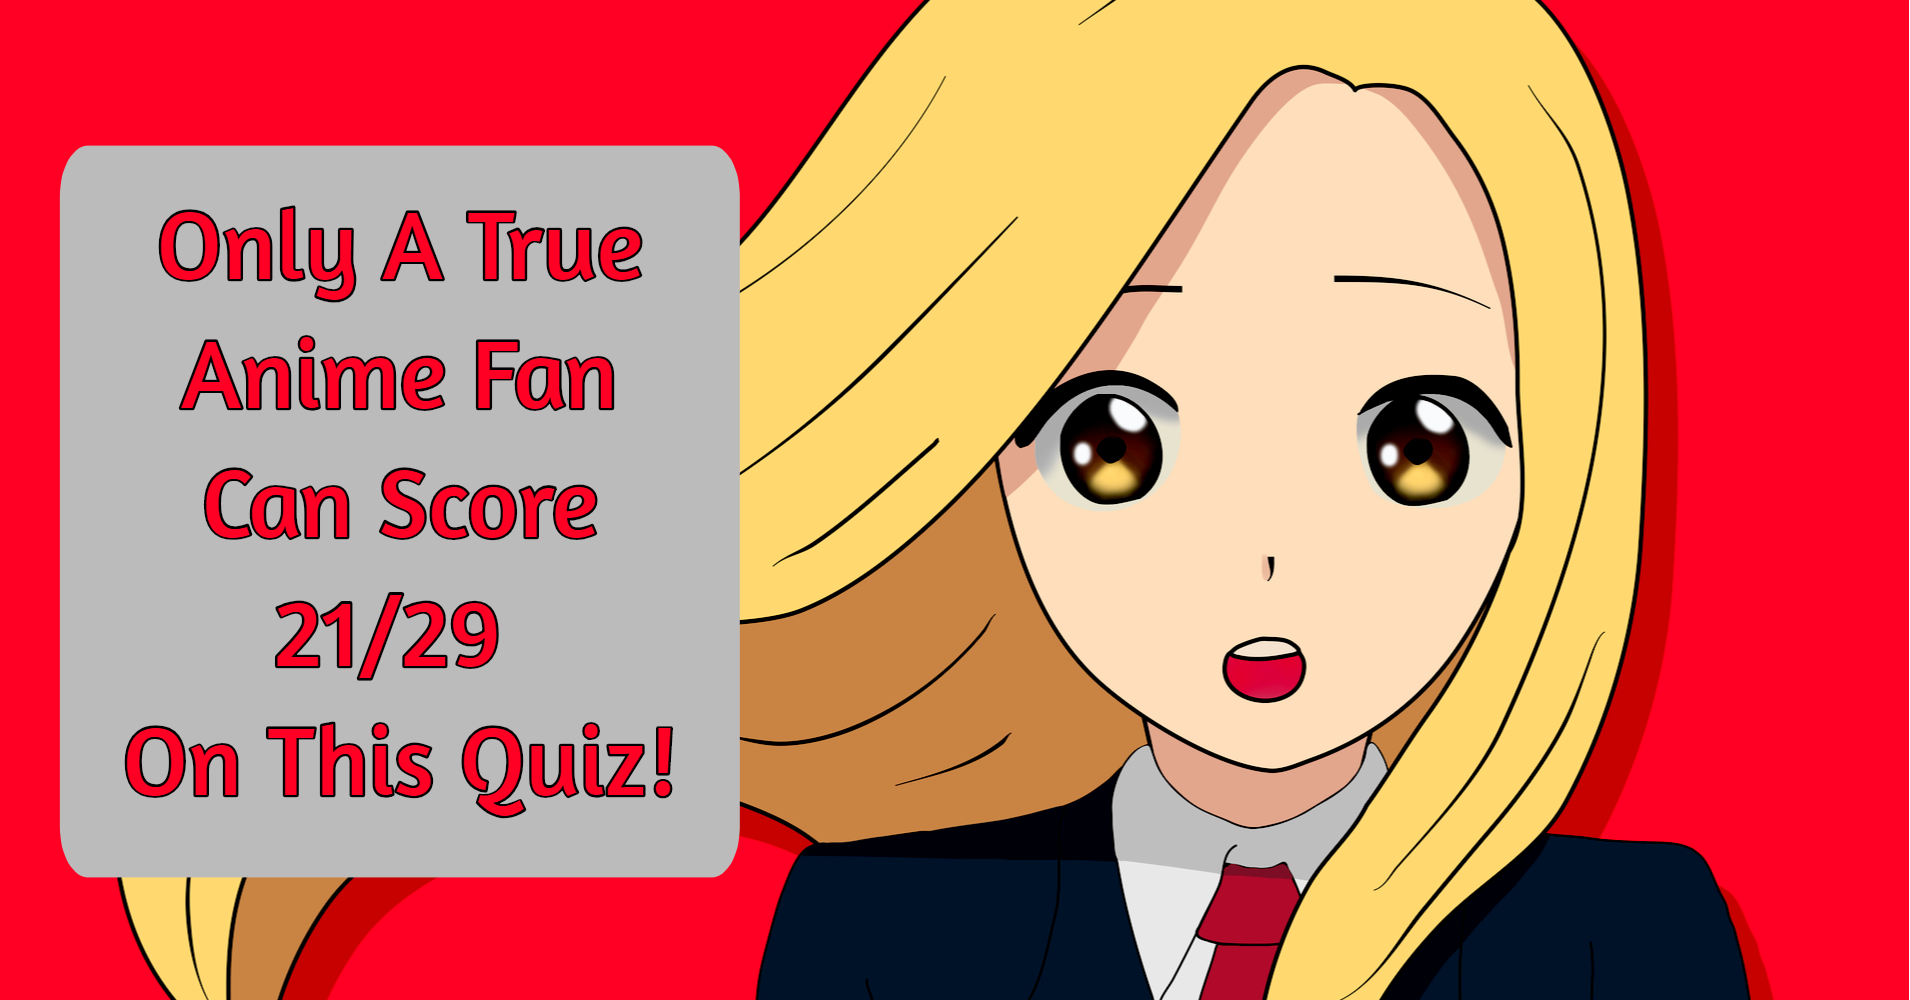 Are You A True Anime Fan Quiz - ProProfs Quiz